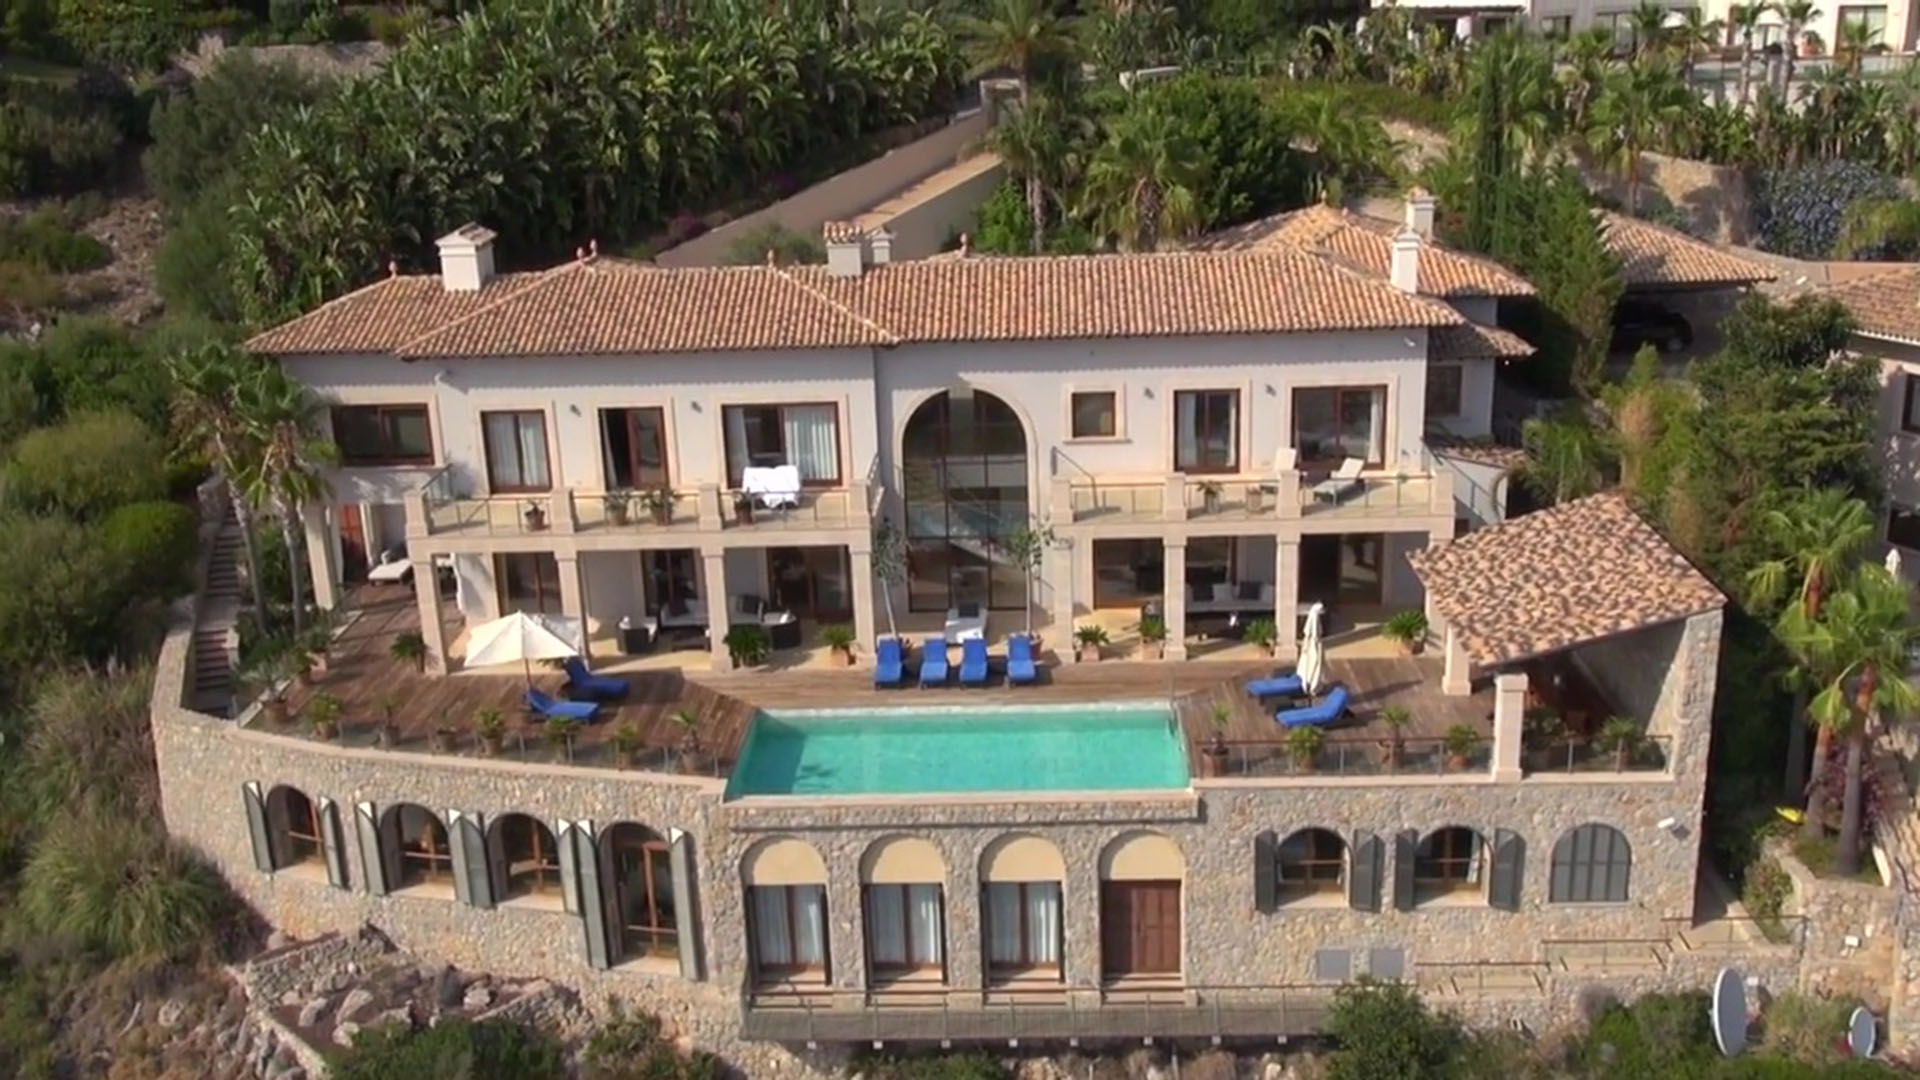 La mansión que la familia de Schumacher adquirió en Mallorca costó cerca de USD 3 millones.